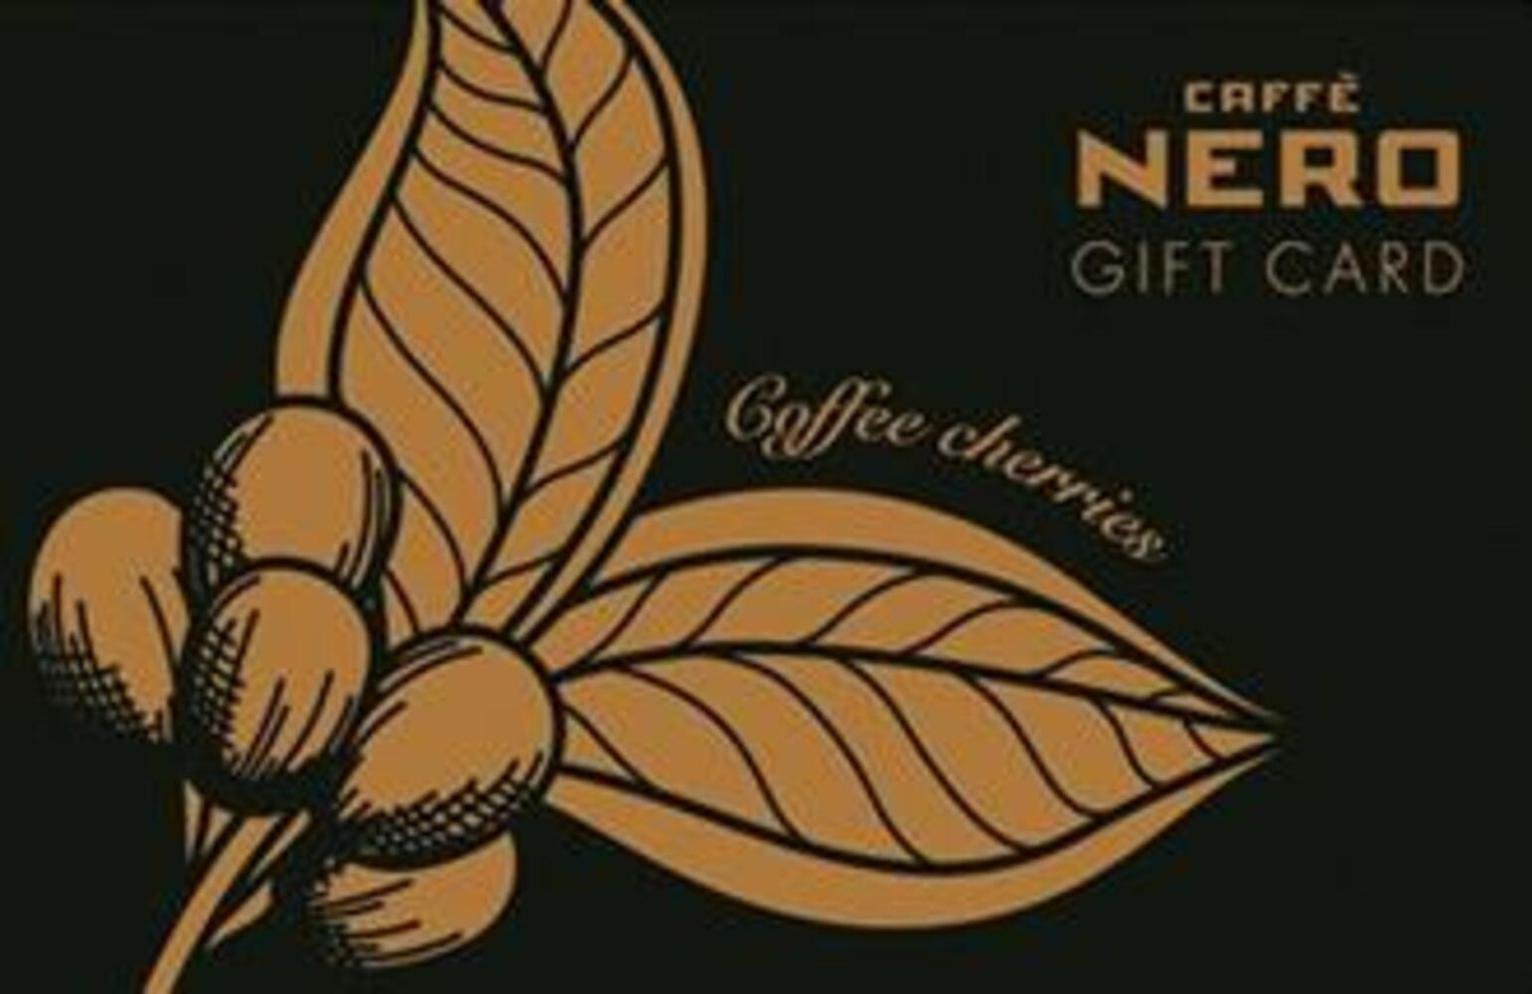 Caffe Nero 15 GBP Gift Card